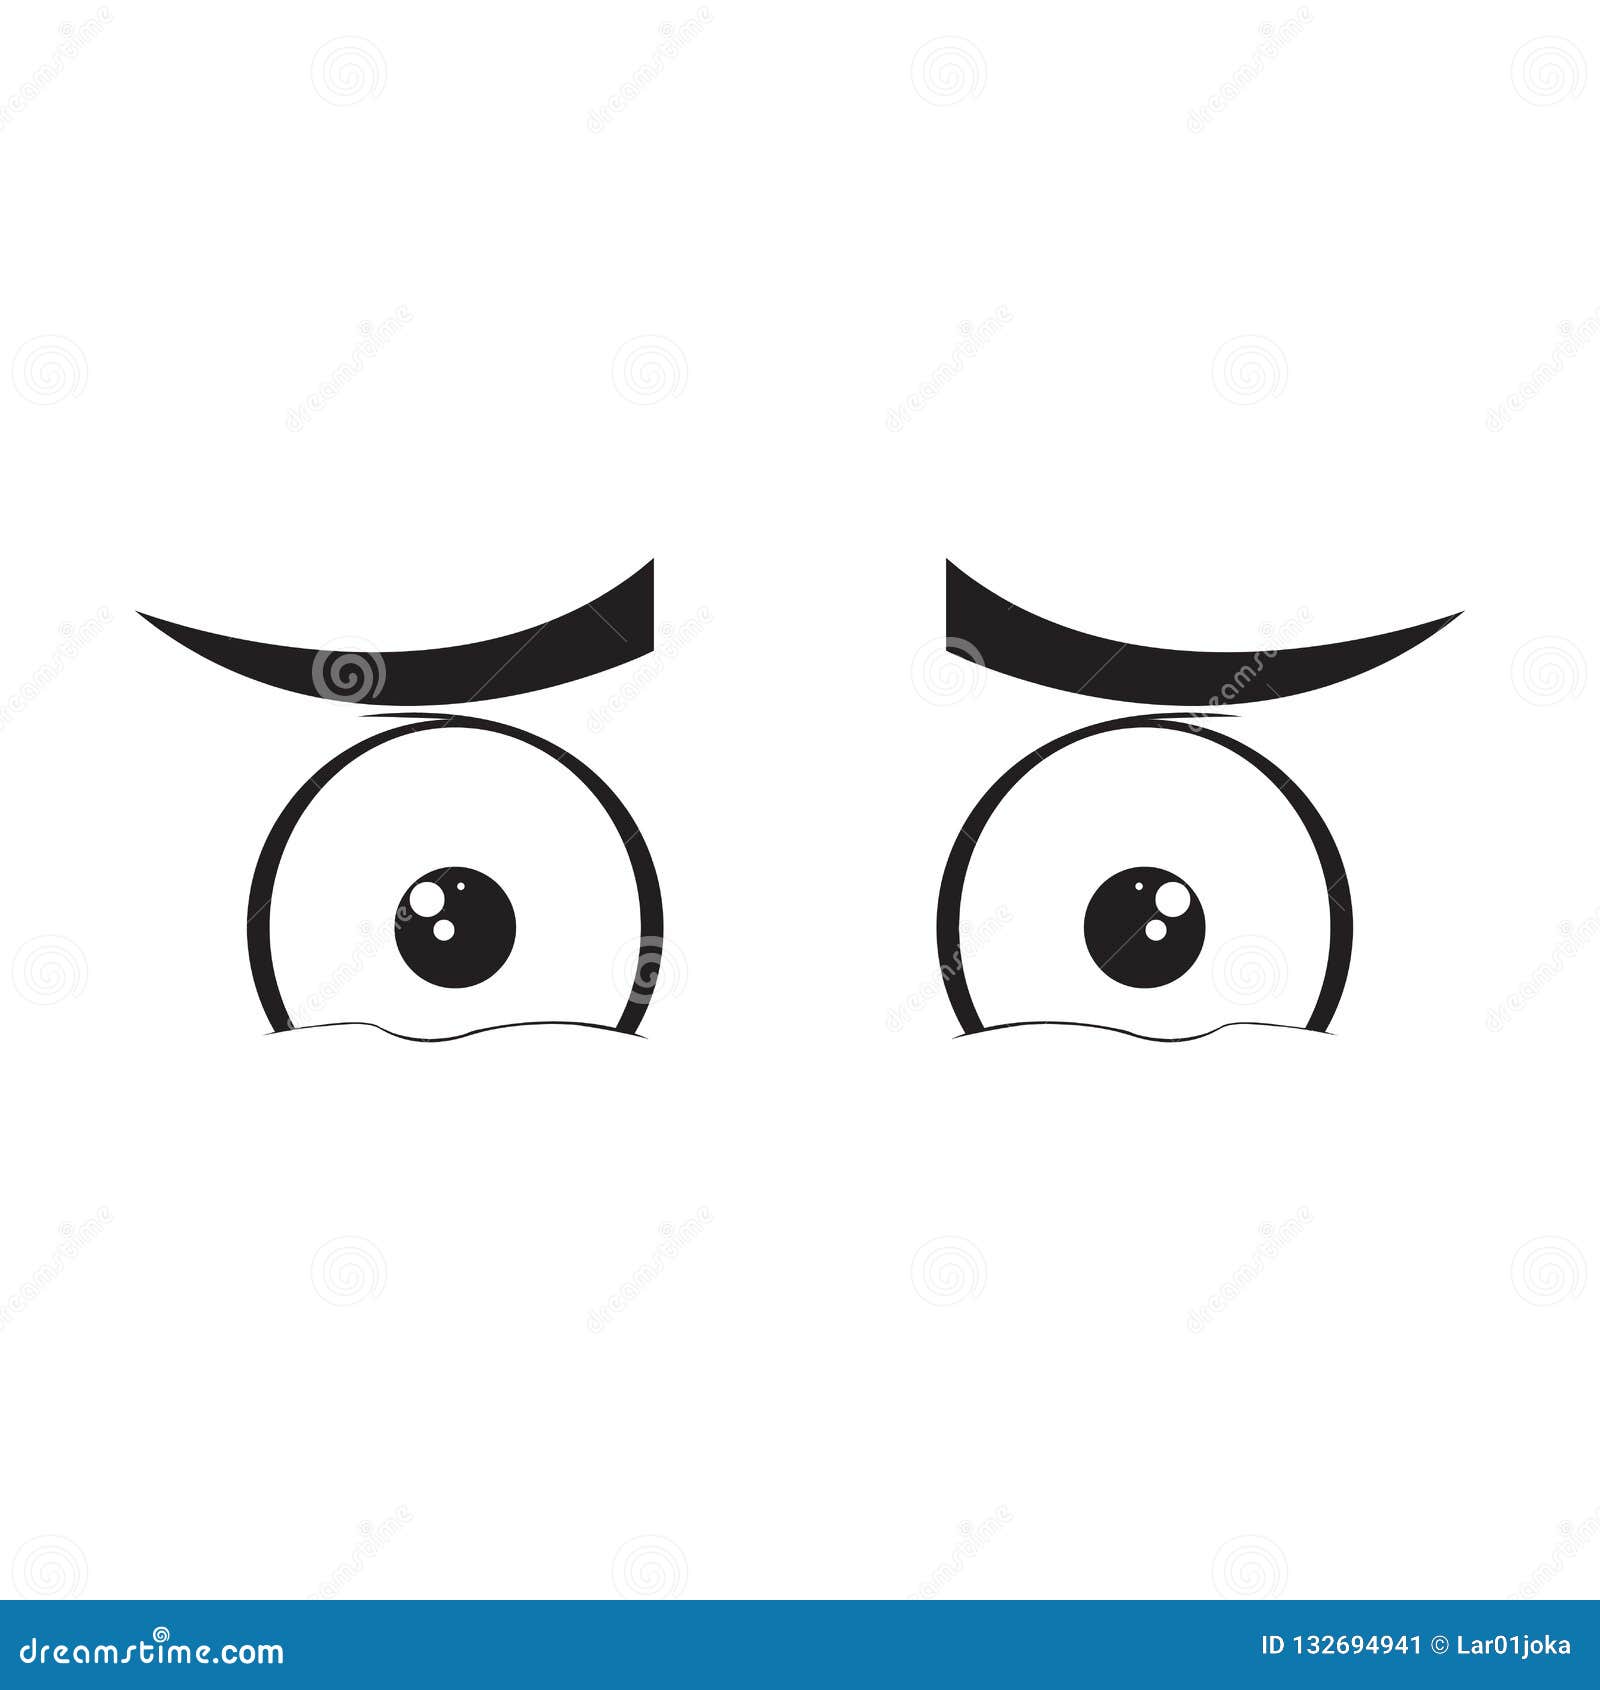 Sad eyes cartoon stock vector. Illustration of icon - 132694941